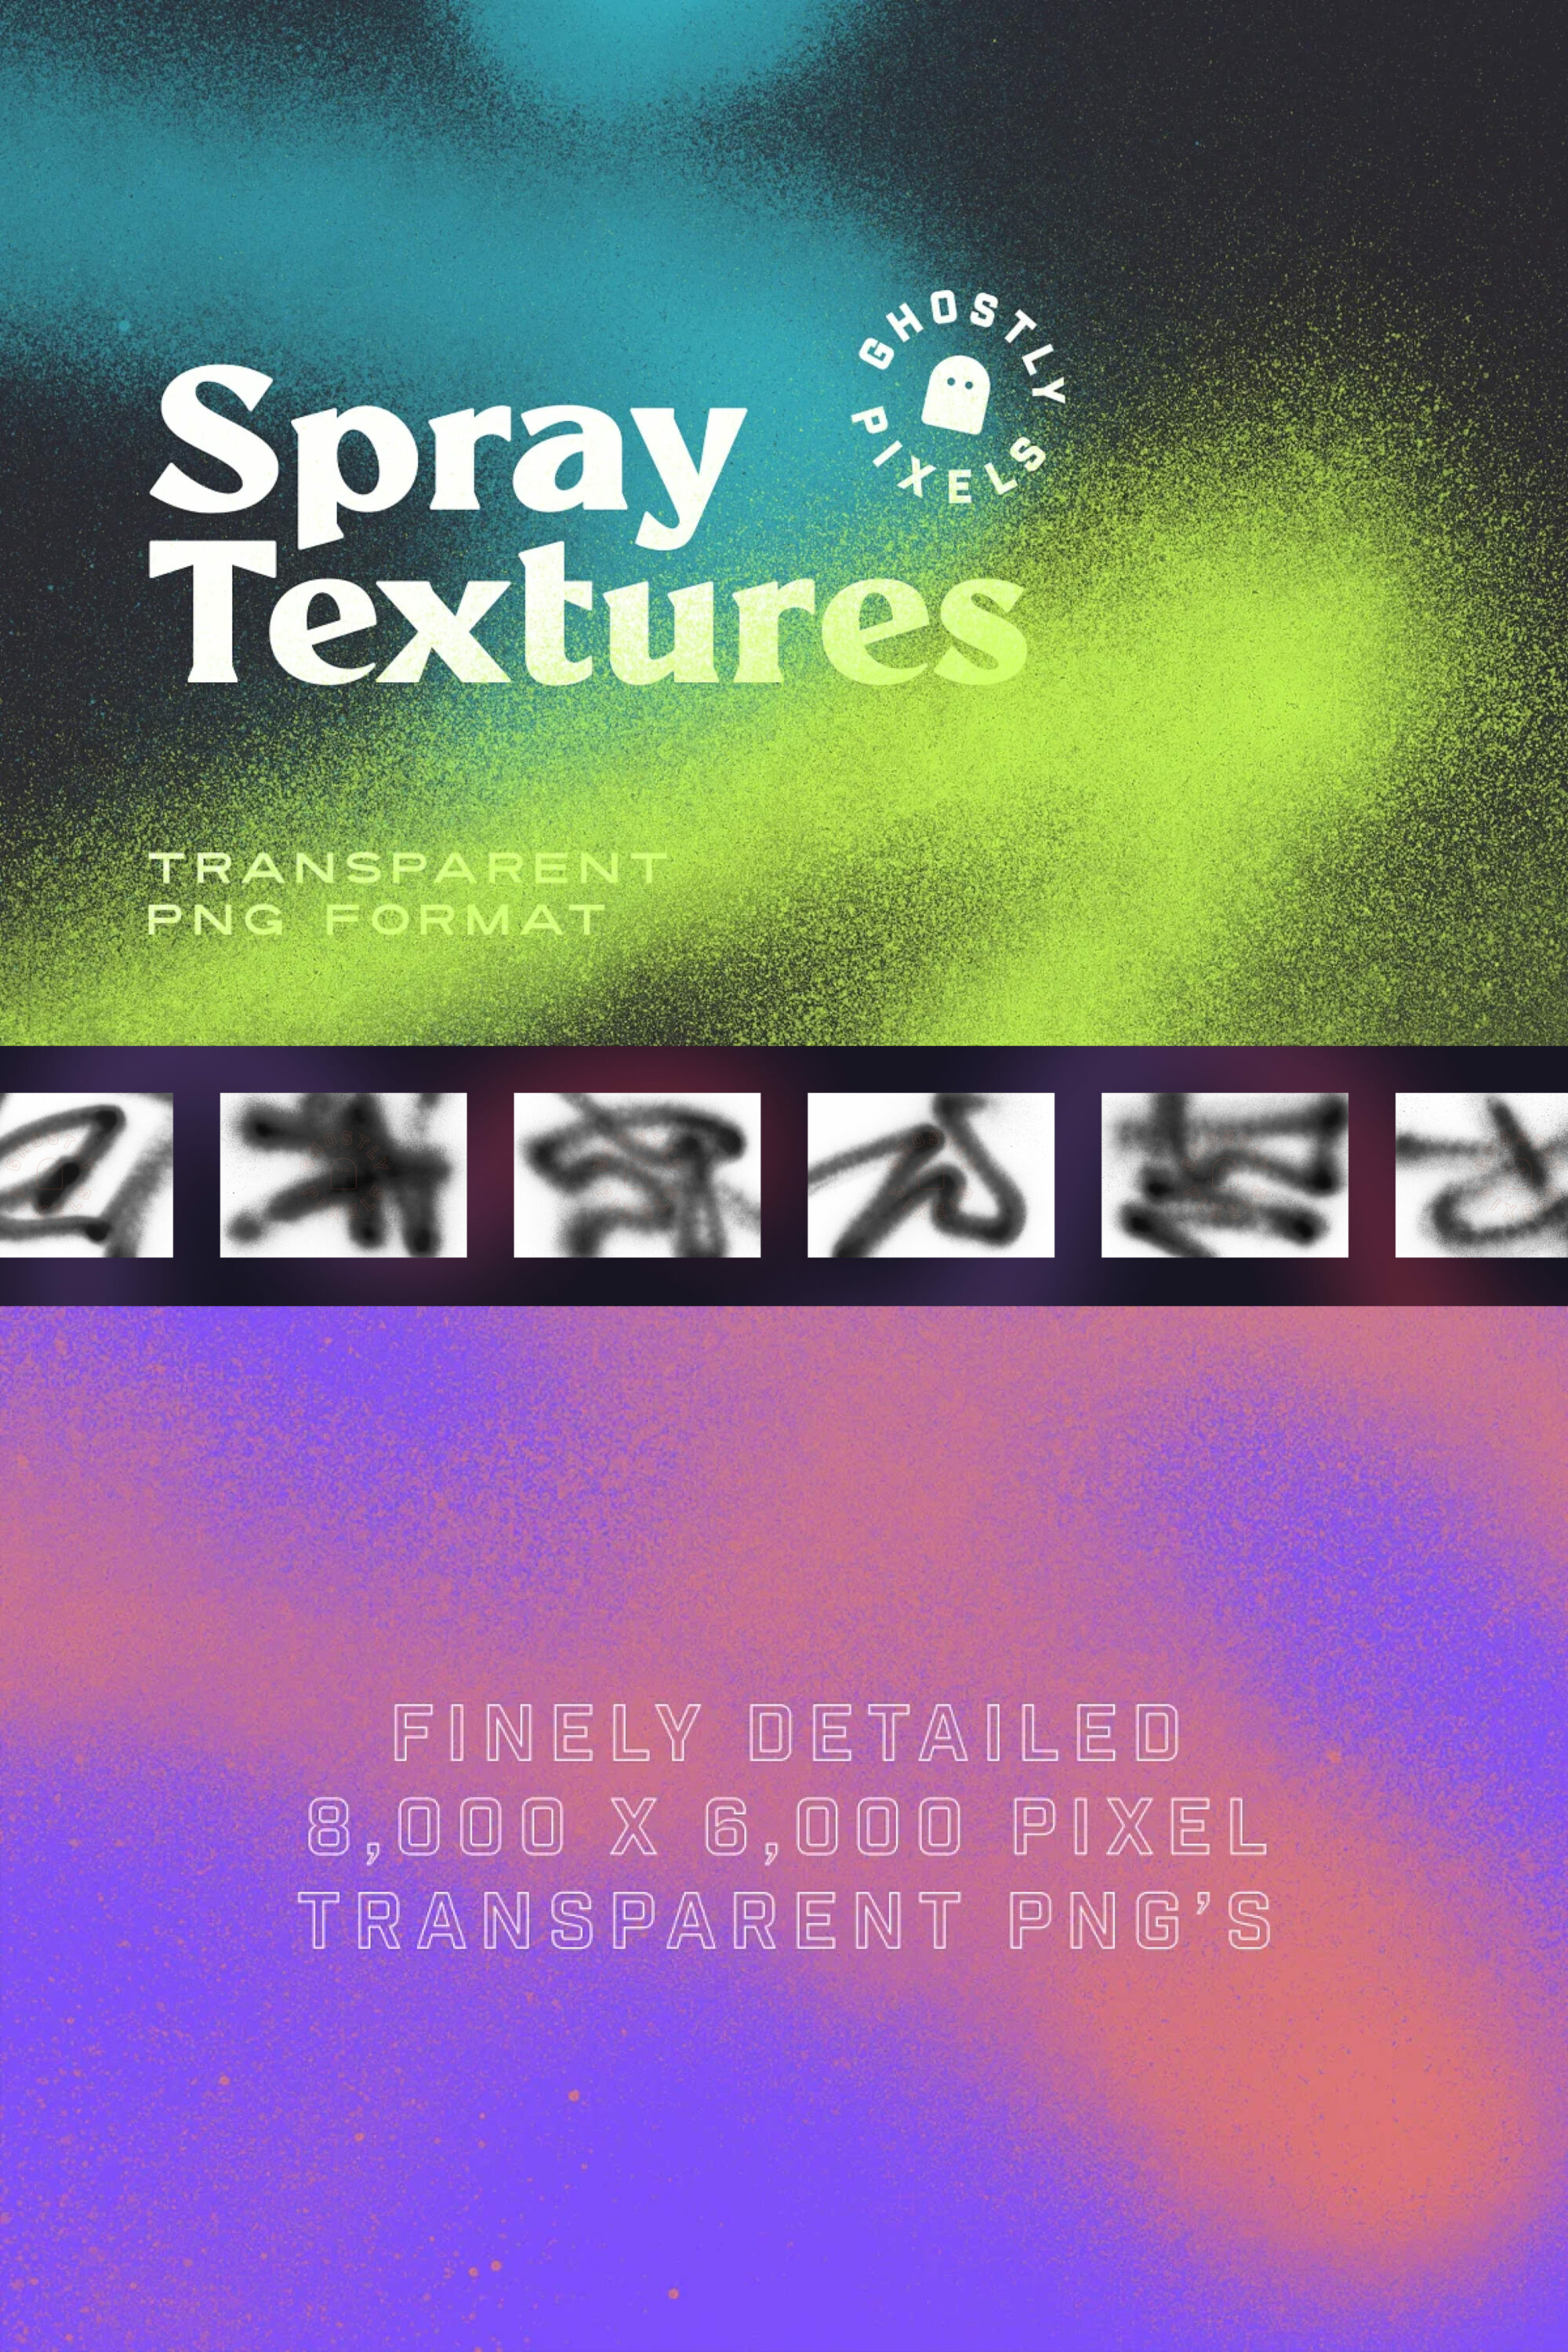 Spray Paint Textures pinterest image.